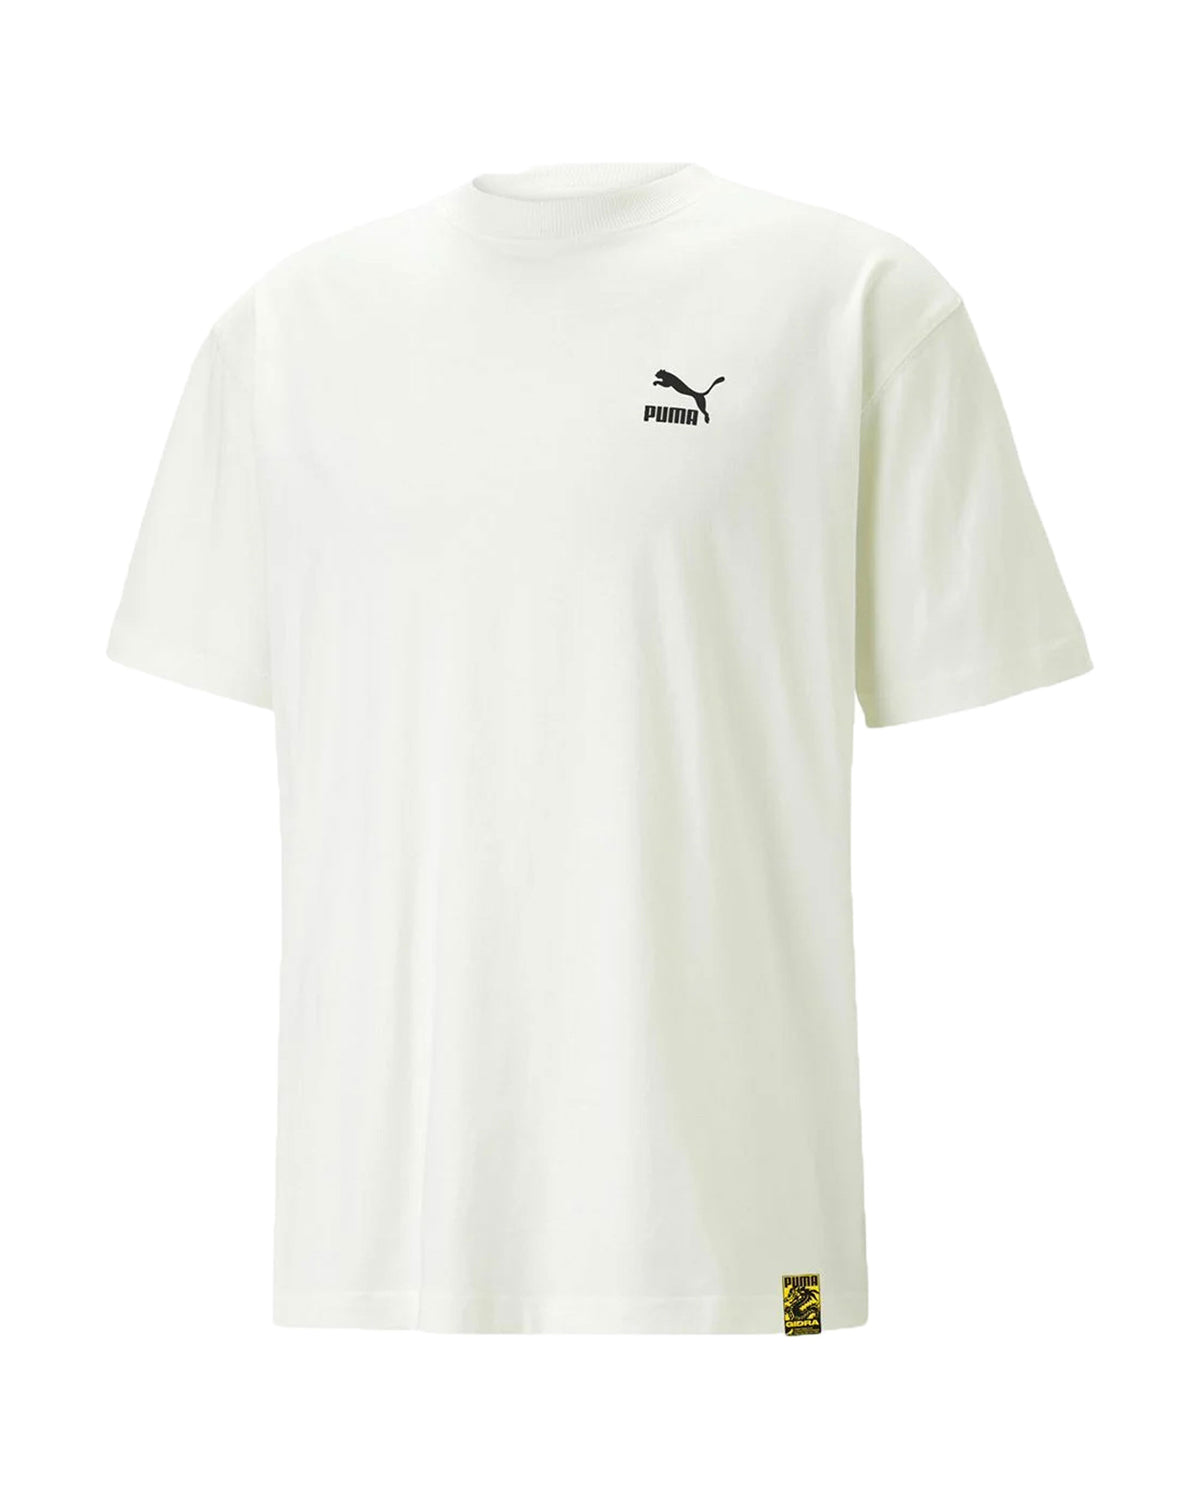 Puma x Staple T-shirt Warm White